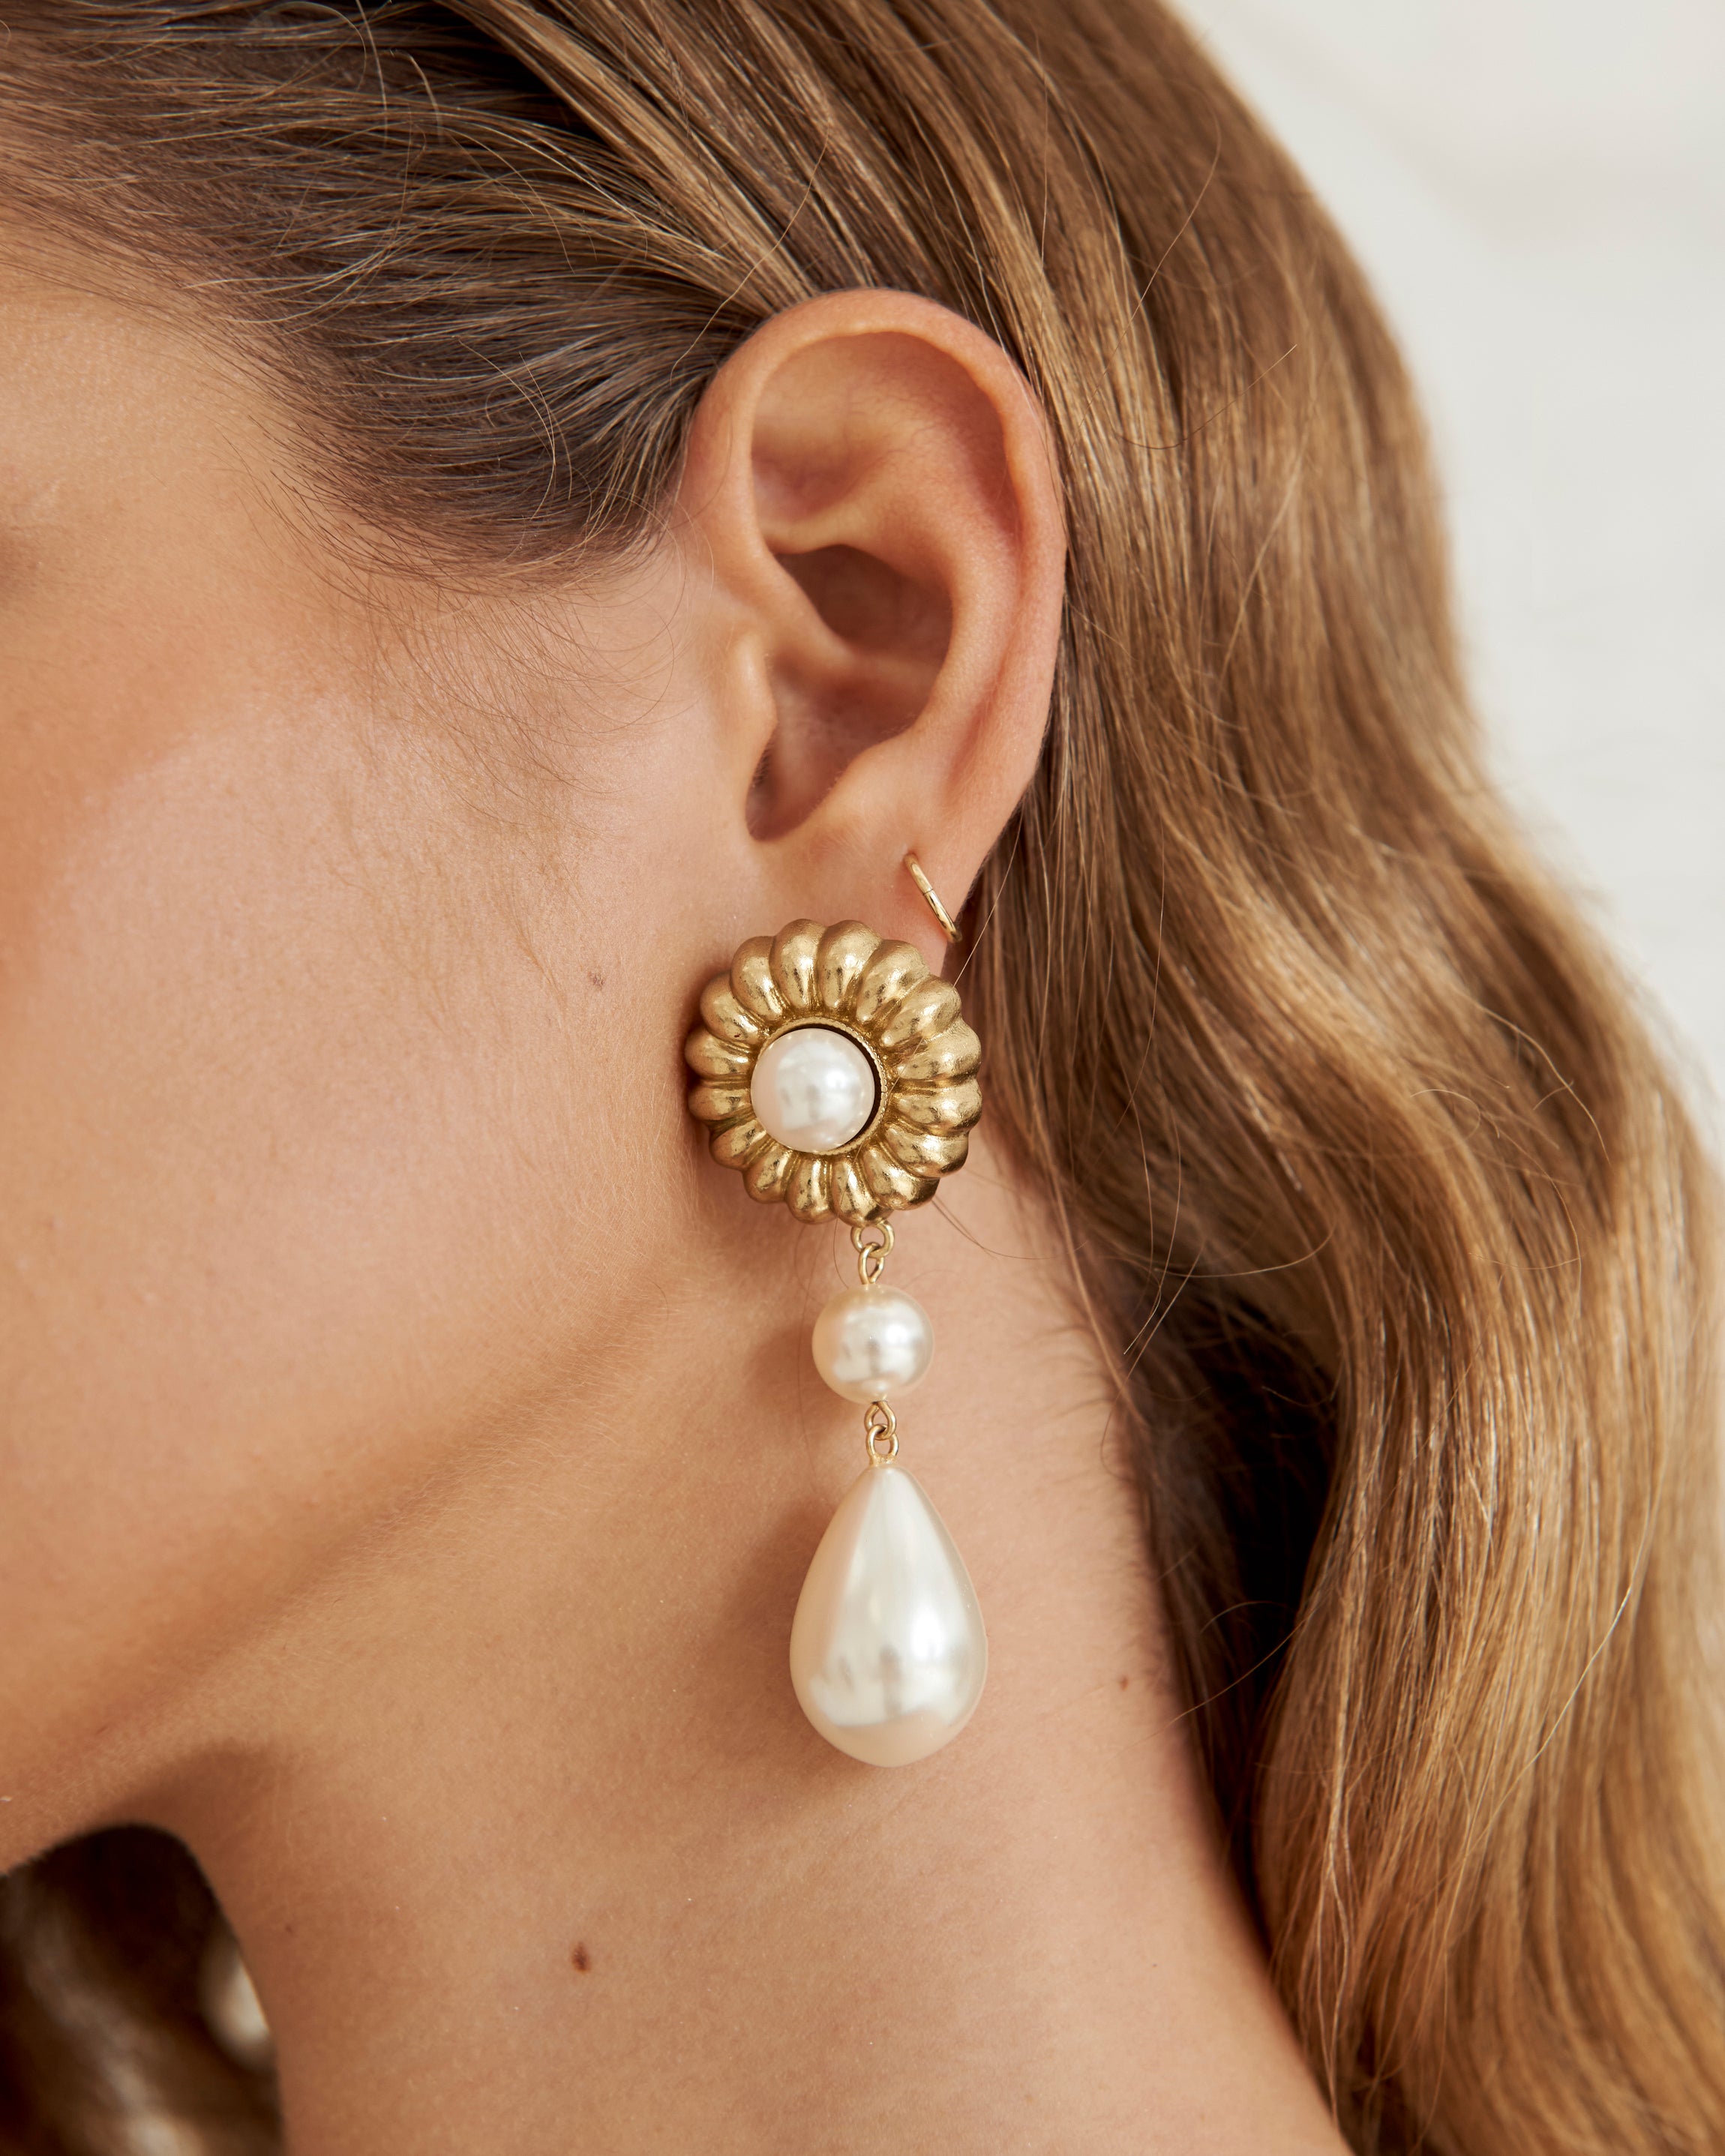 Nina Gold Earrings by Sita Nevado